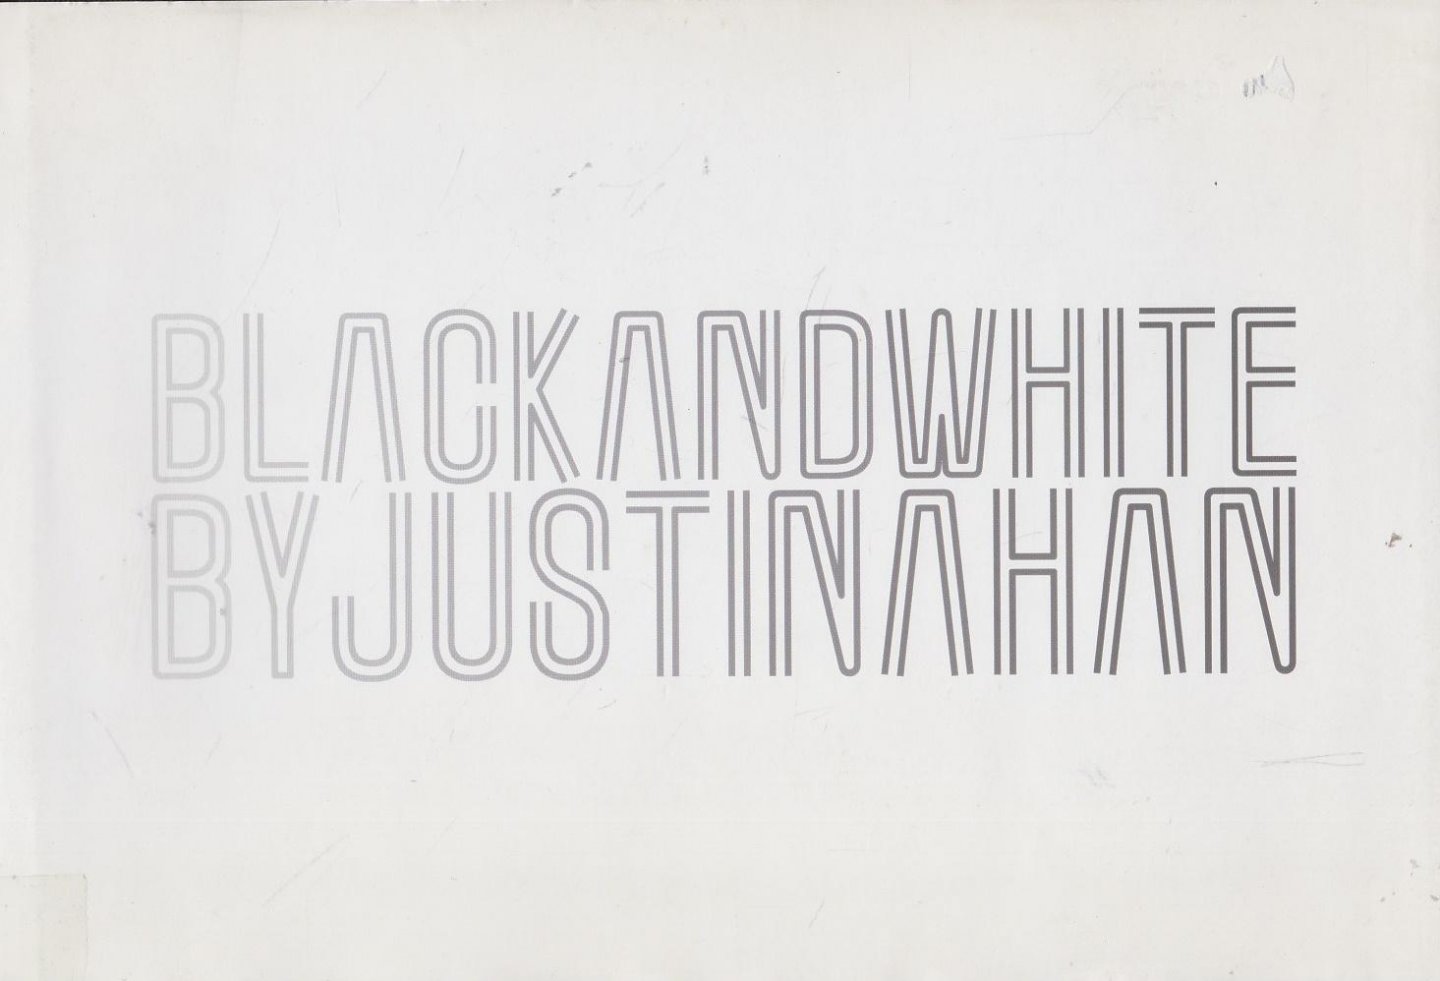 Han, Justina - Black and white